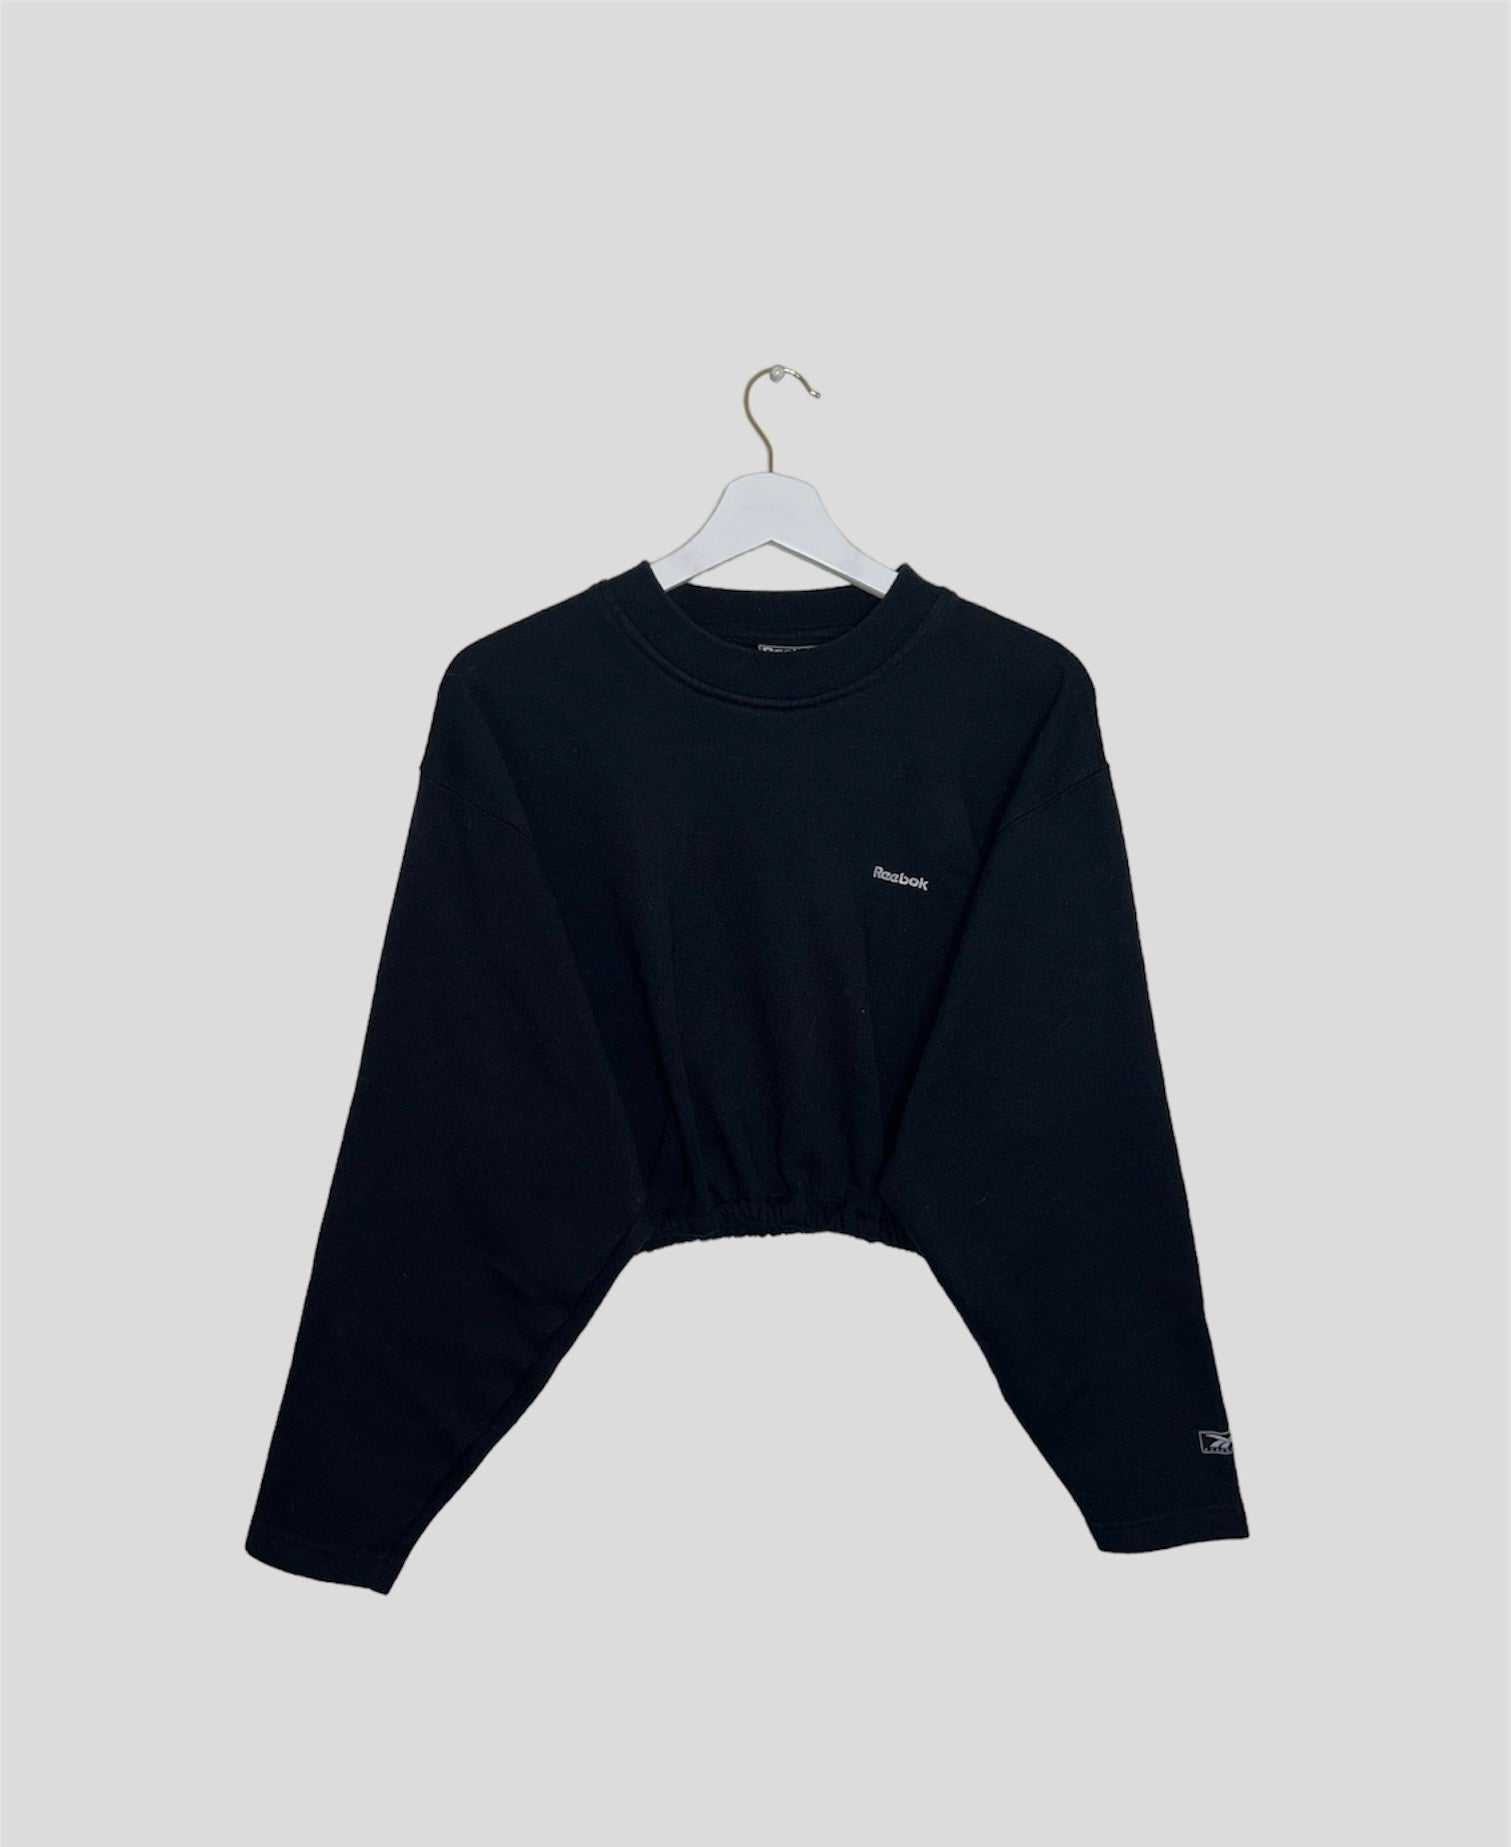 black cropped sweatshirt with white reebok logo